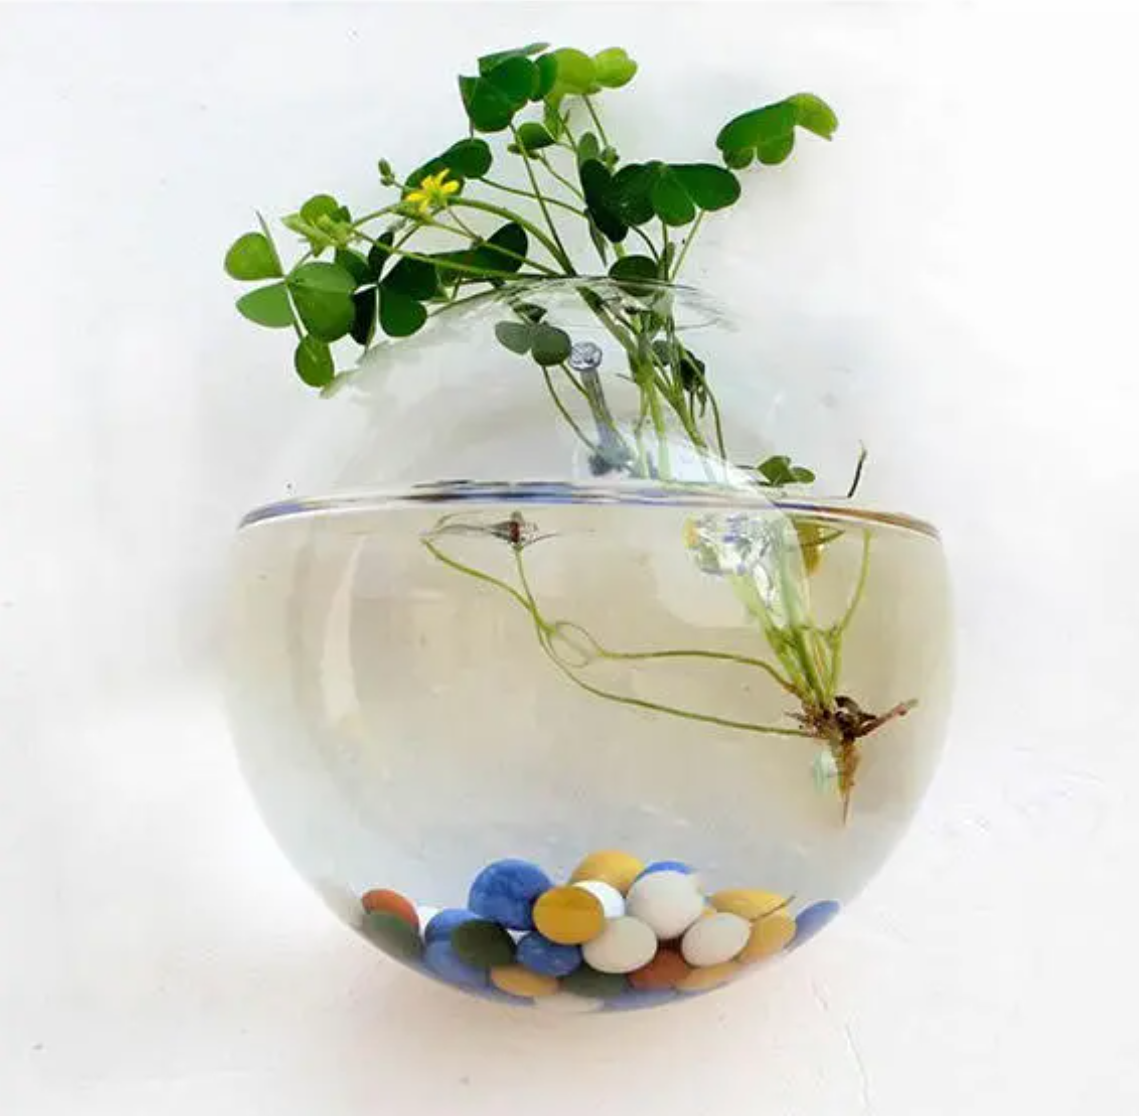 Creative Wall Mount Hydroponic Plant Vase